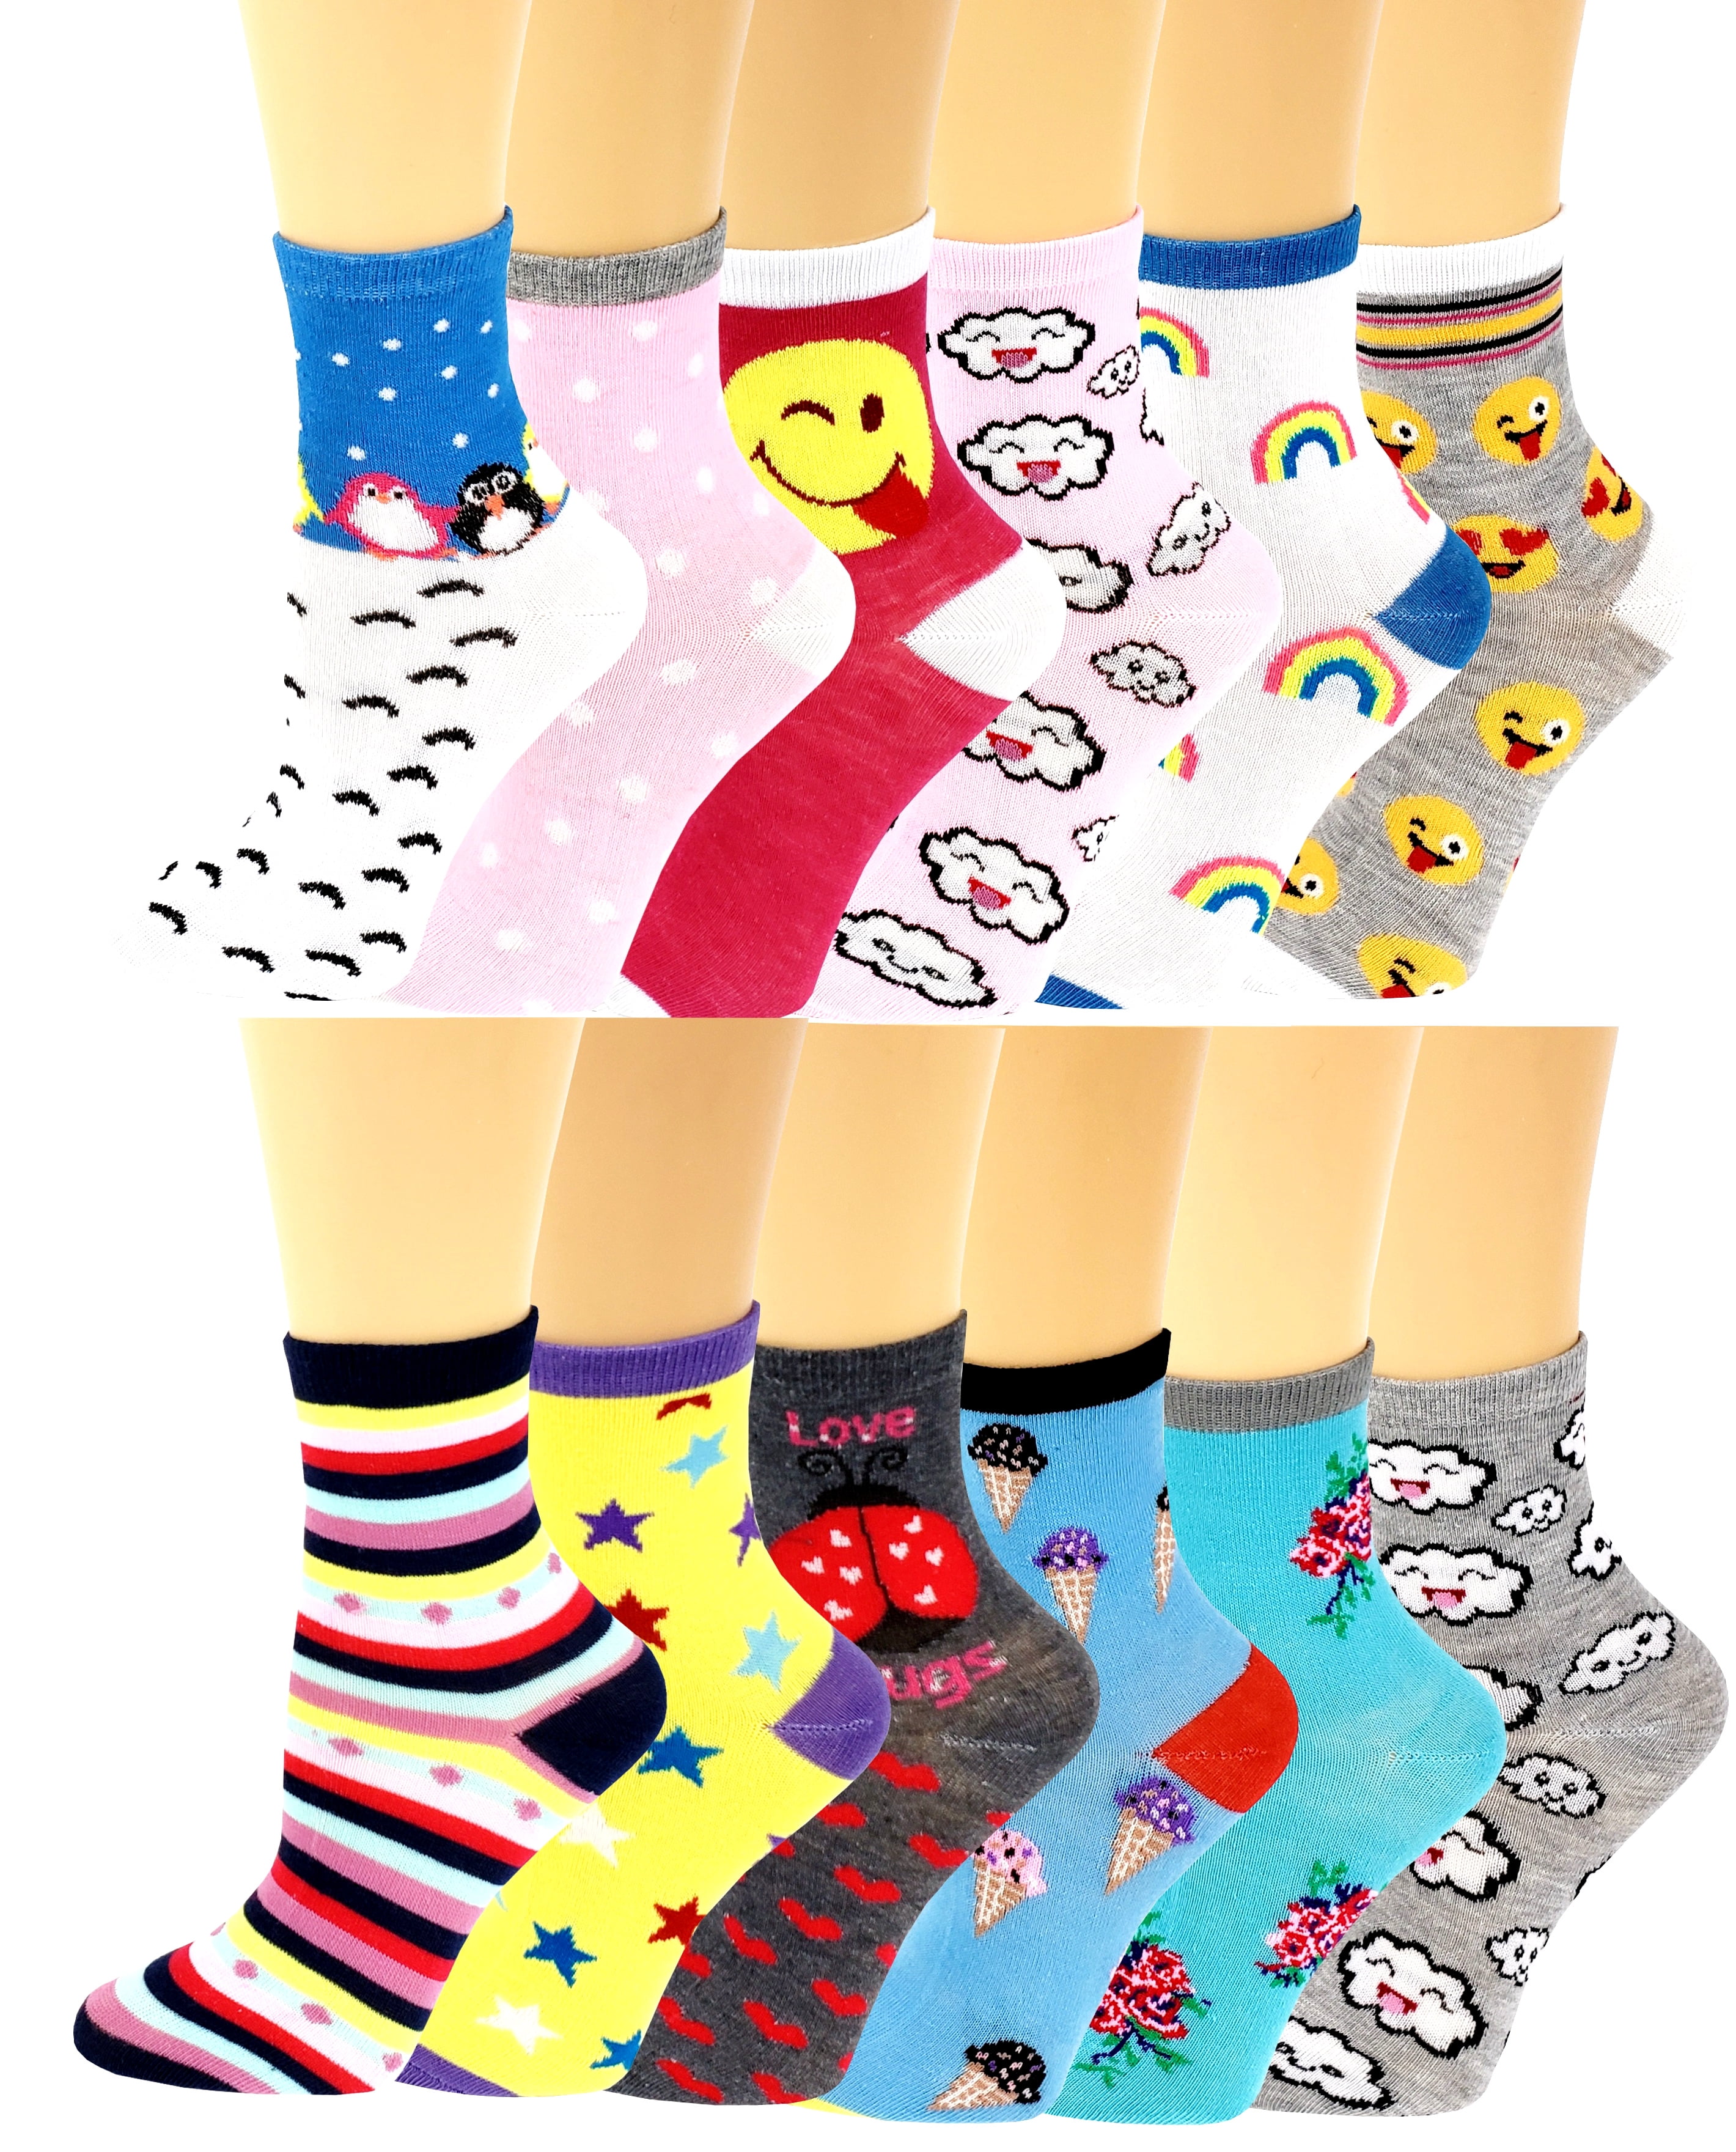 Girls Knee High School Socks 4-6 Size 12 pairs